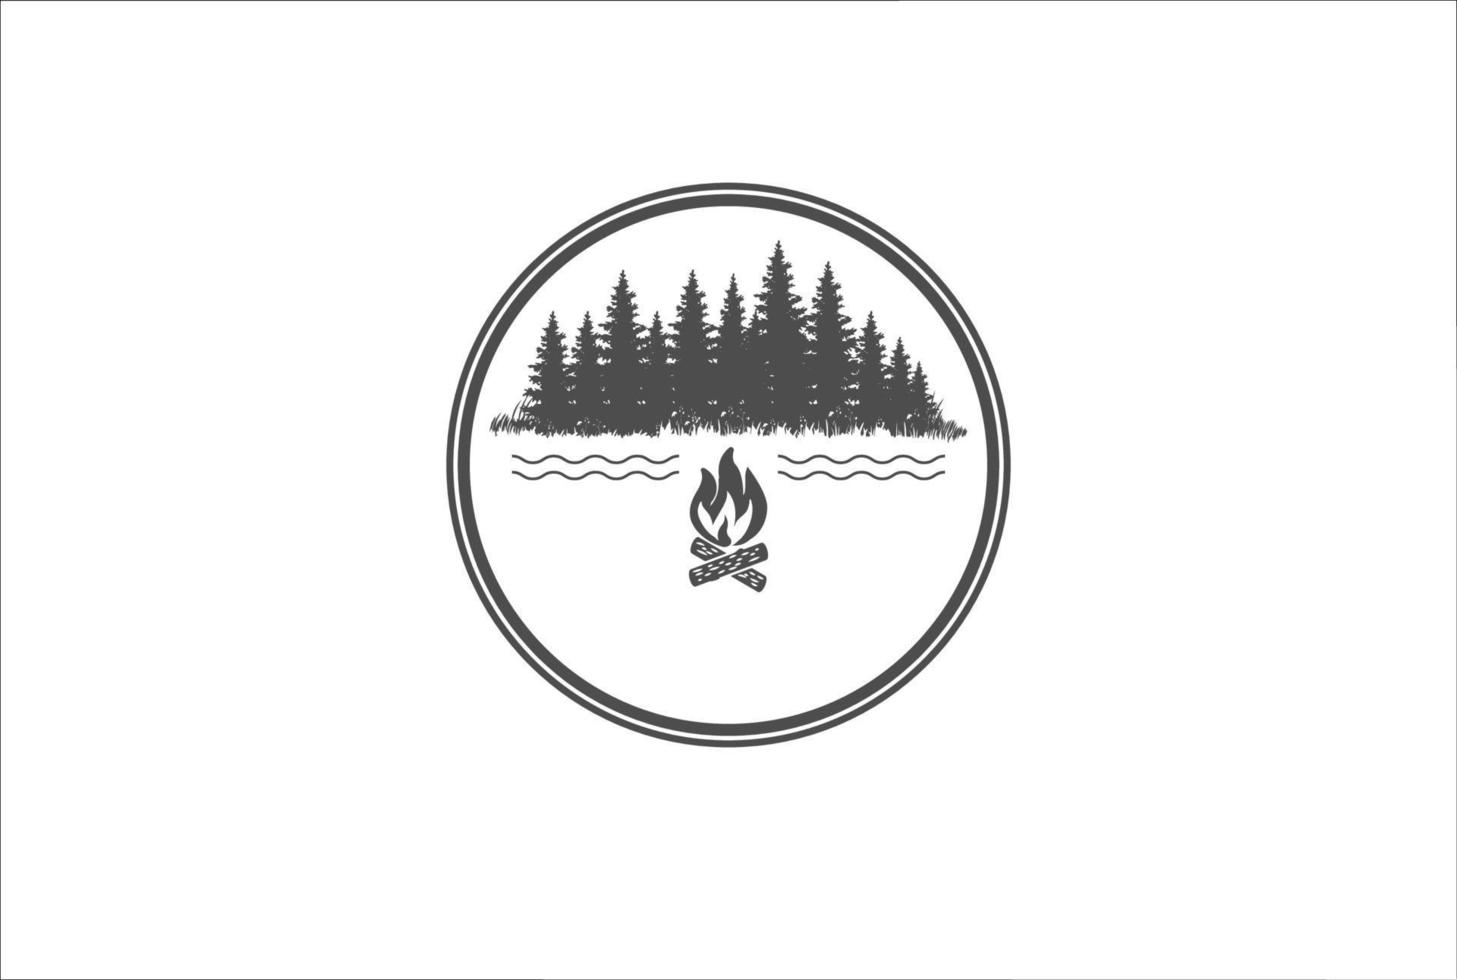 Pine Cedar Conifer Coniferous Evergreen Fir Larch Cypress Hemlock Tress Forest and River Lake Creek and Bonfire for Camp Outdoor Adventure Logo Design Vector